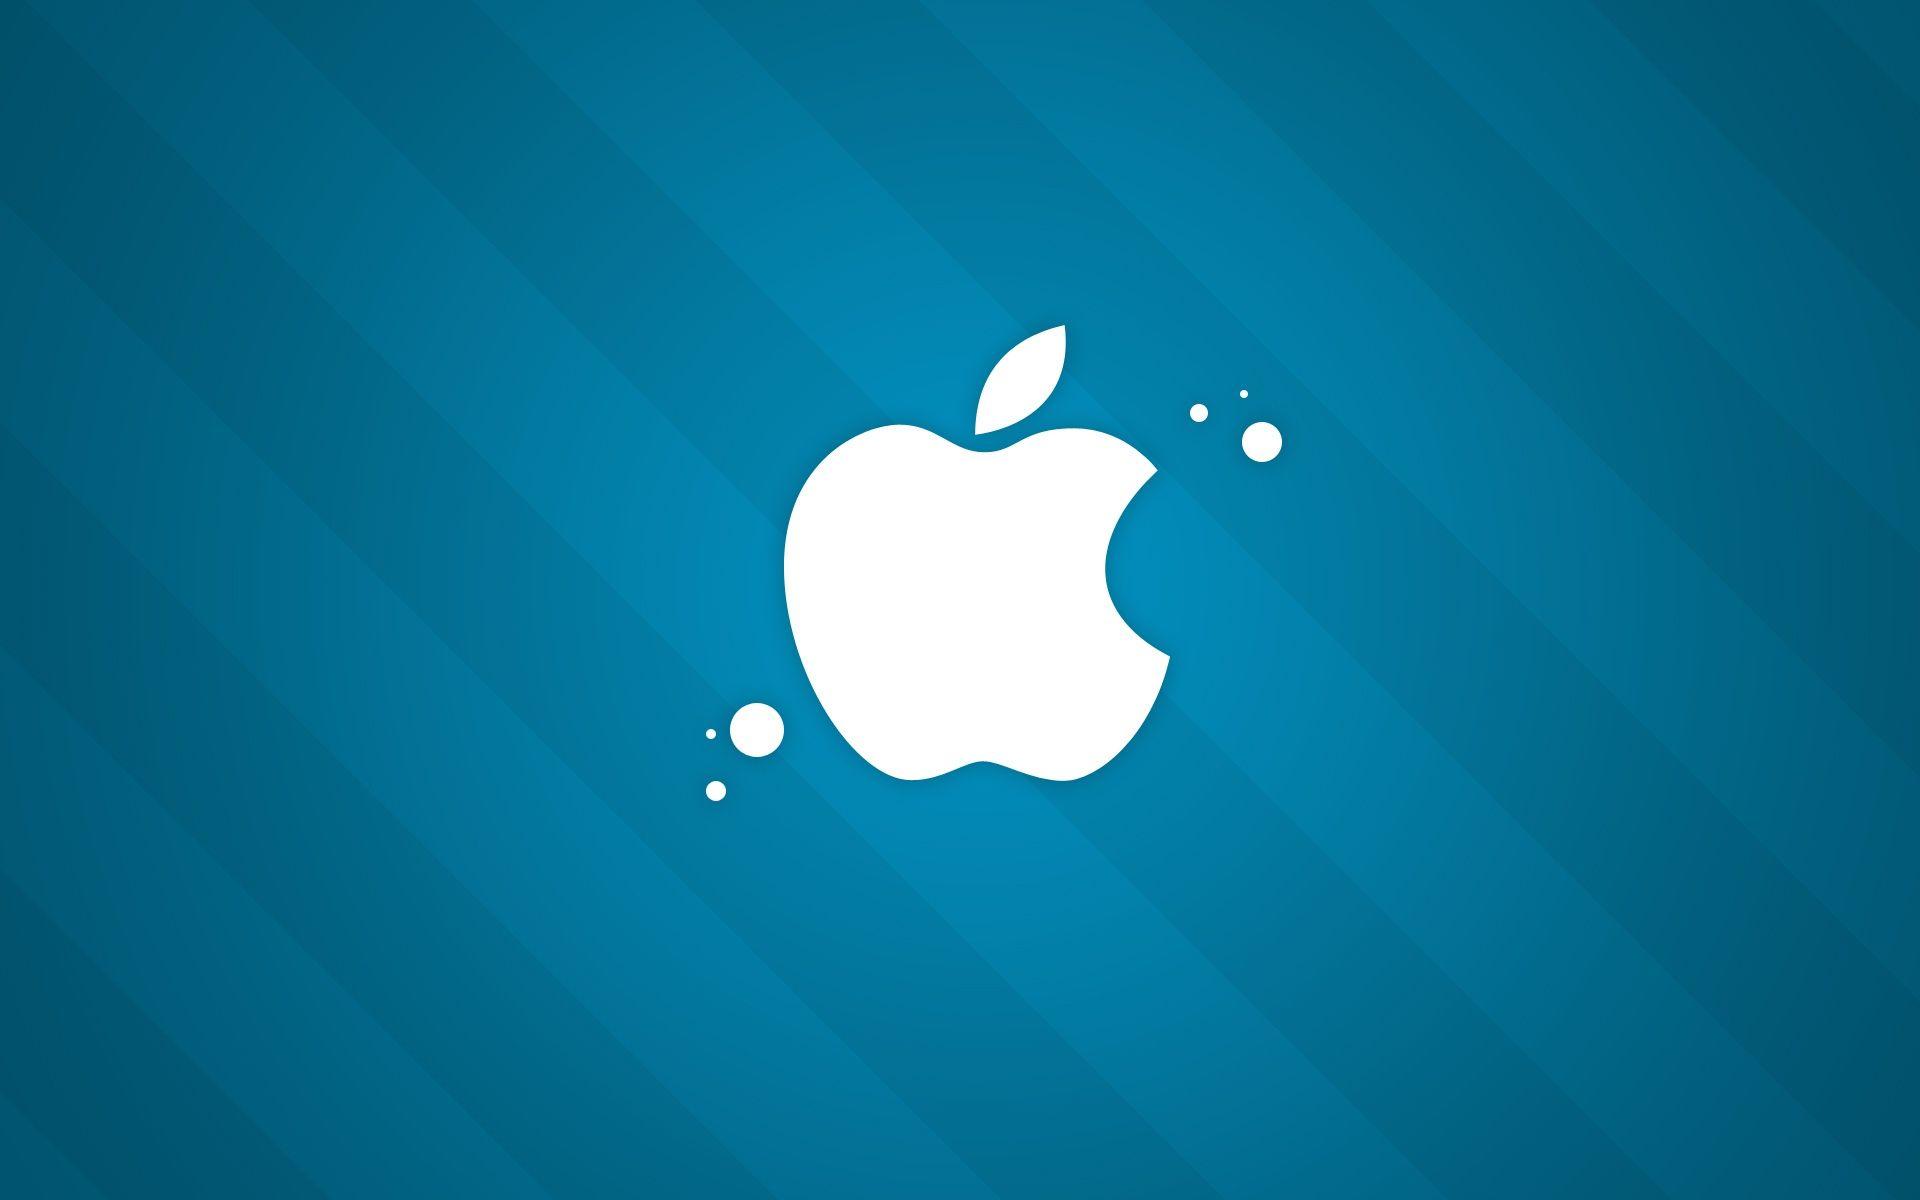 Blue Apple Logo Wallpaper, Blue Apple Logo Background, Blue